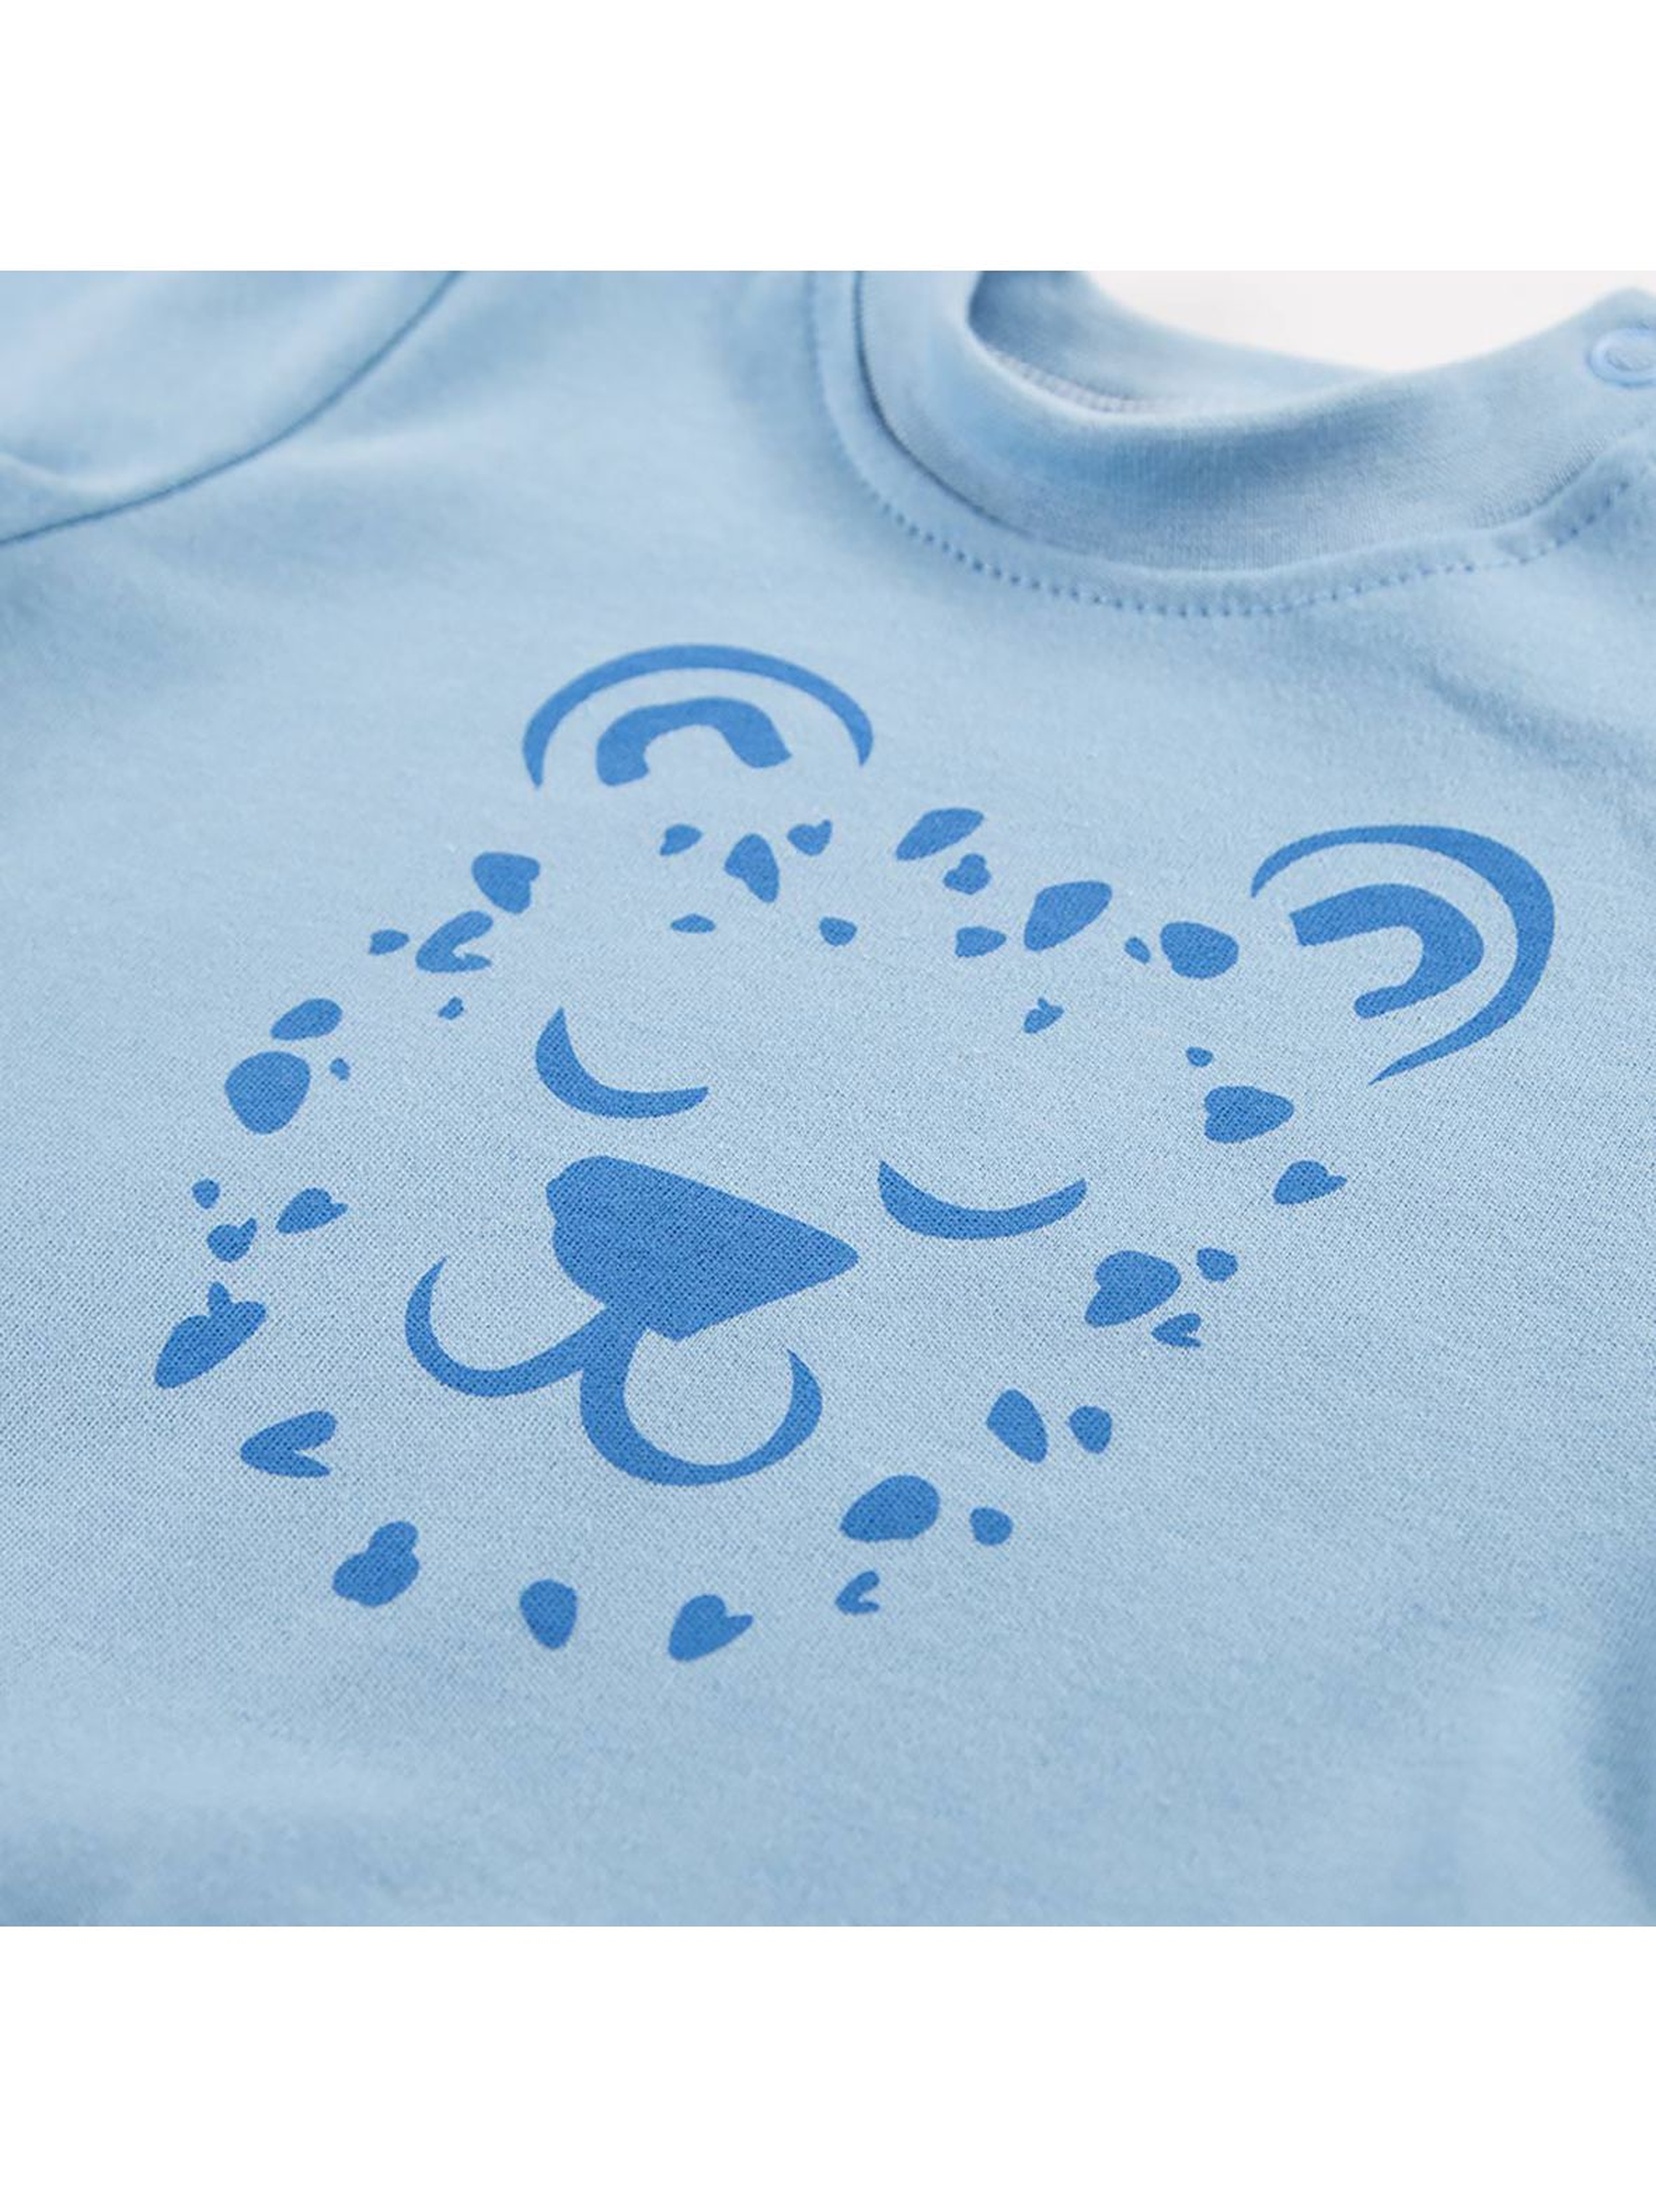 Bluza niemowlęca rozpinana NATURE - niebieska